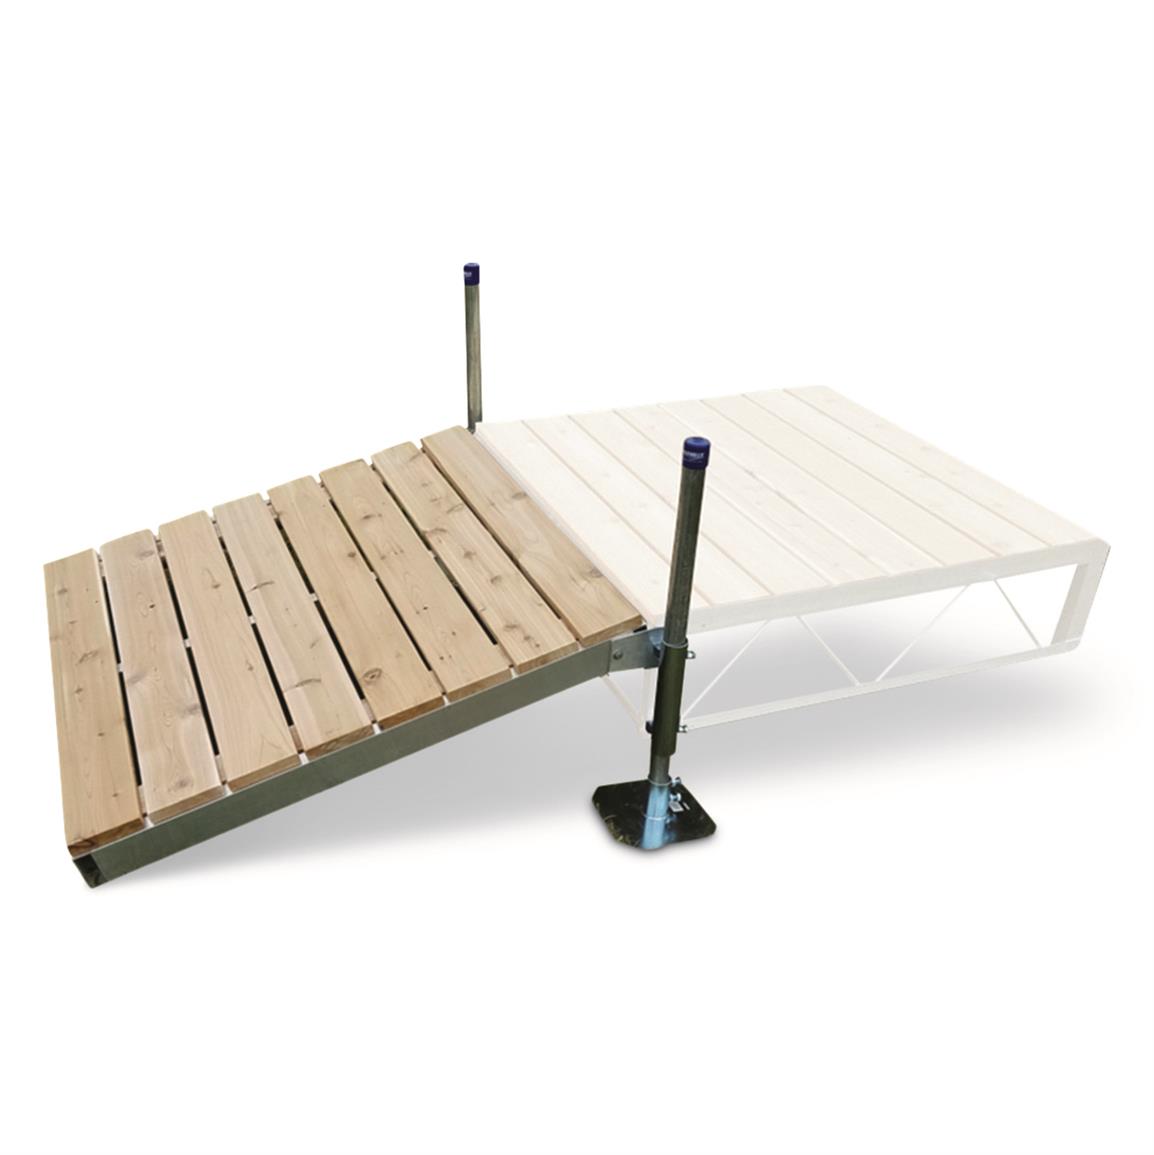 Patriot Docks 4'x4' Shore Ramp Kit with Cedar Deck